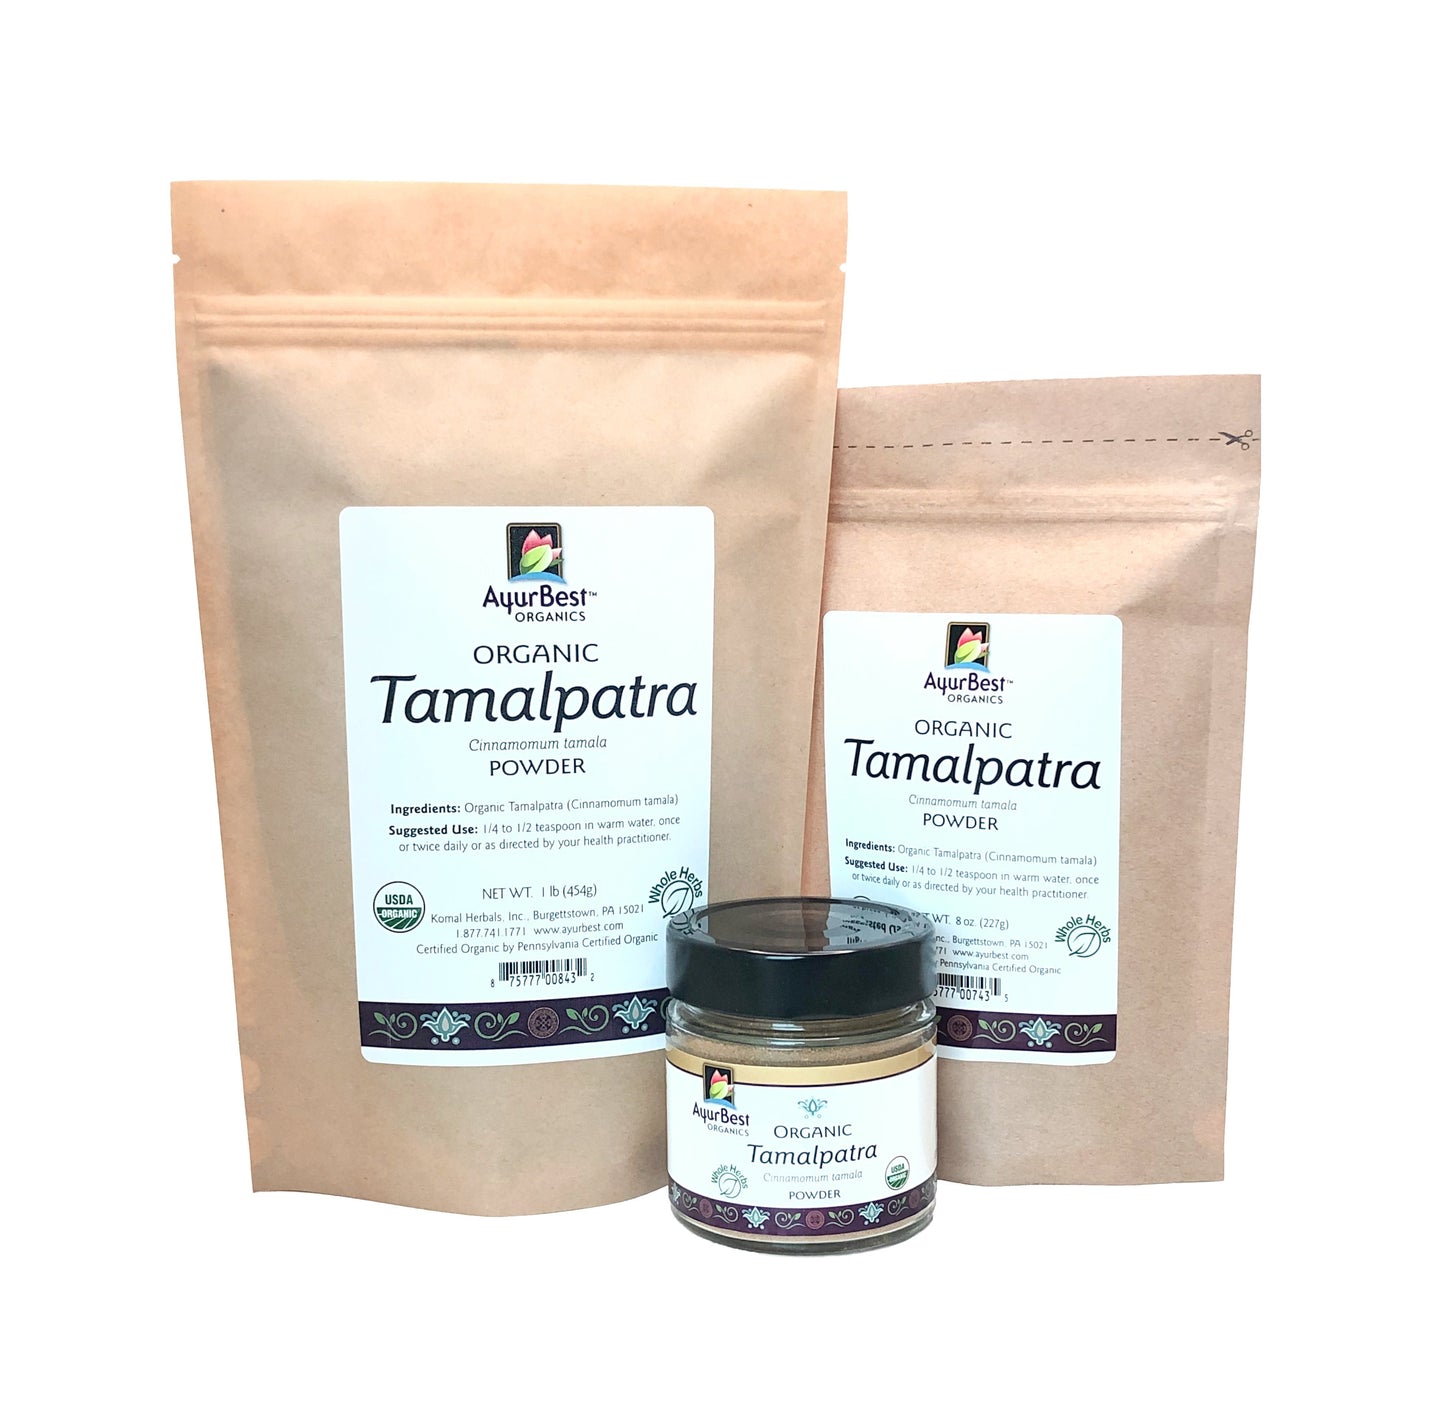 Wholesale Spices & Herbs - Tamalpatra (Indian Bay Leaf) Powder, Organic 1 lb (454g) Bag